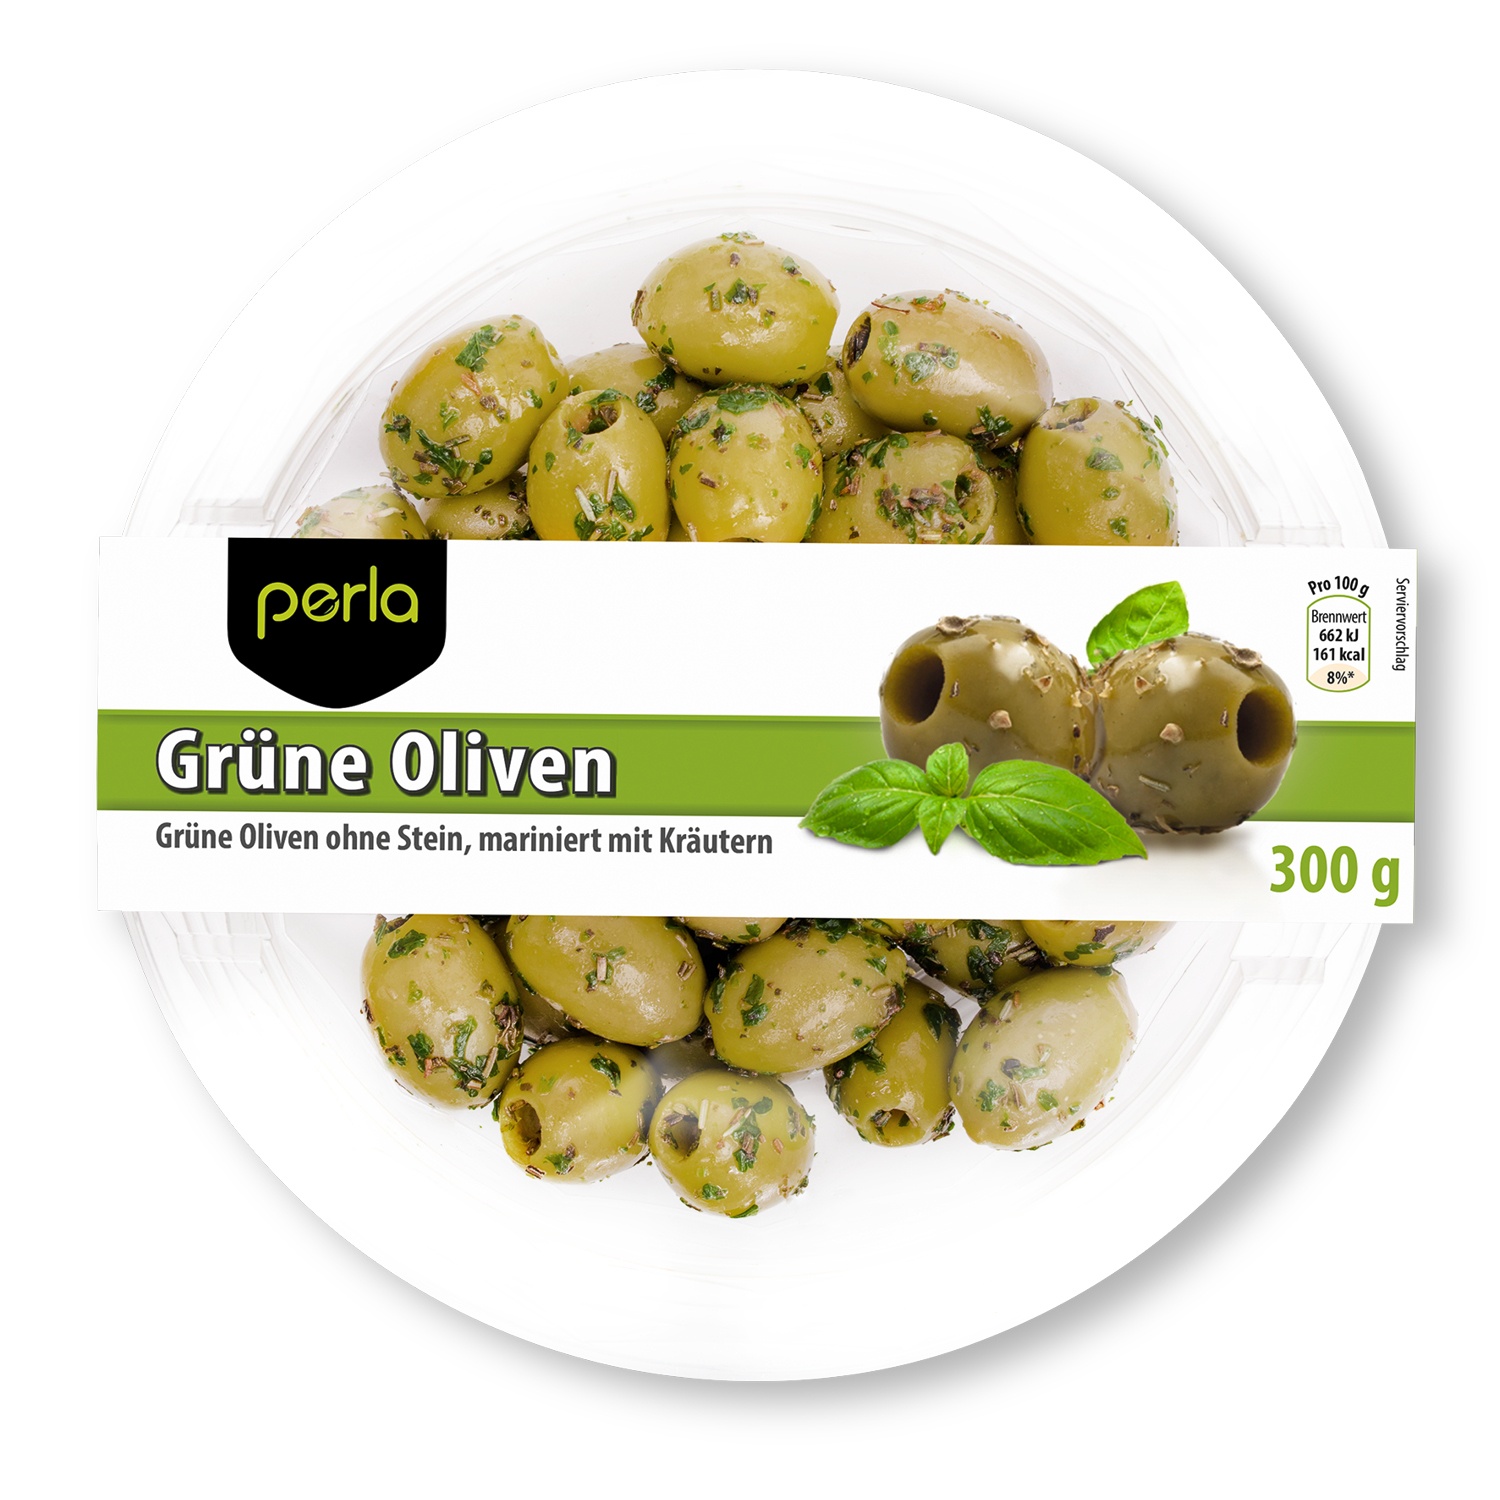 Perla Grüne Oliven 300g